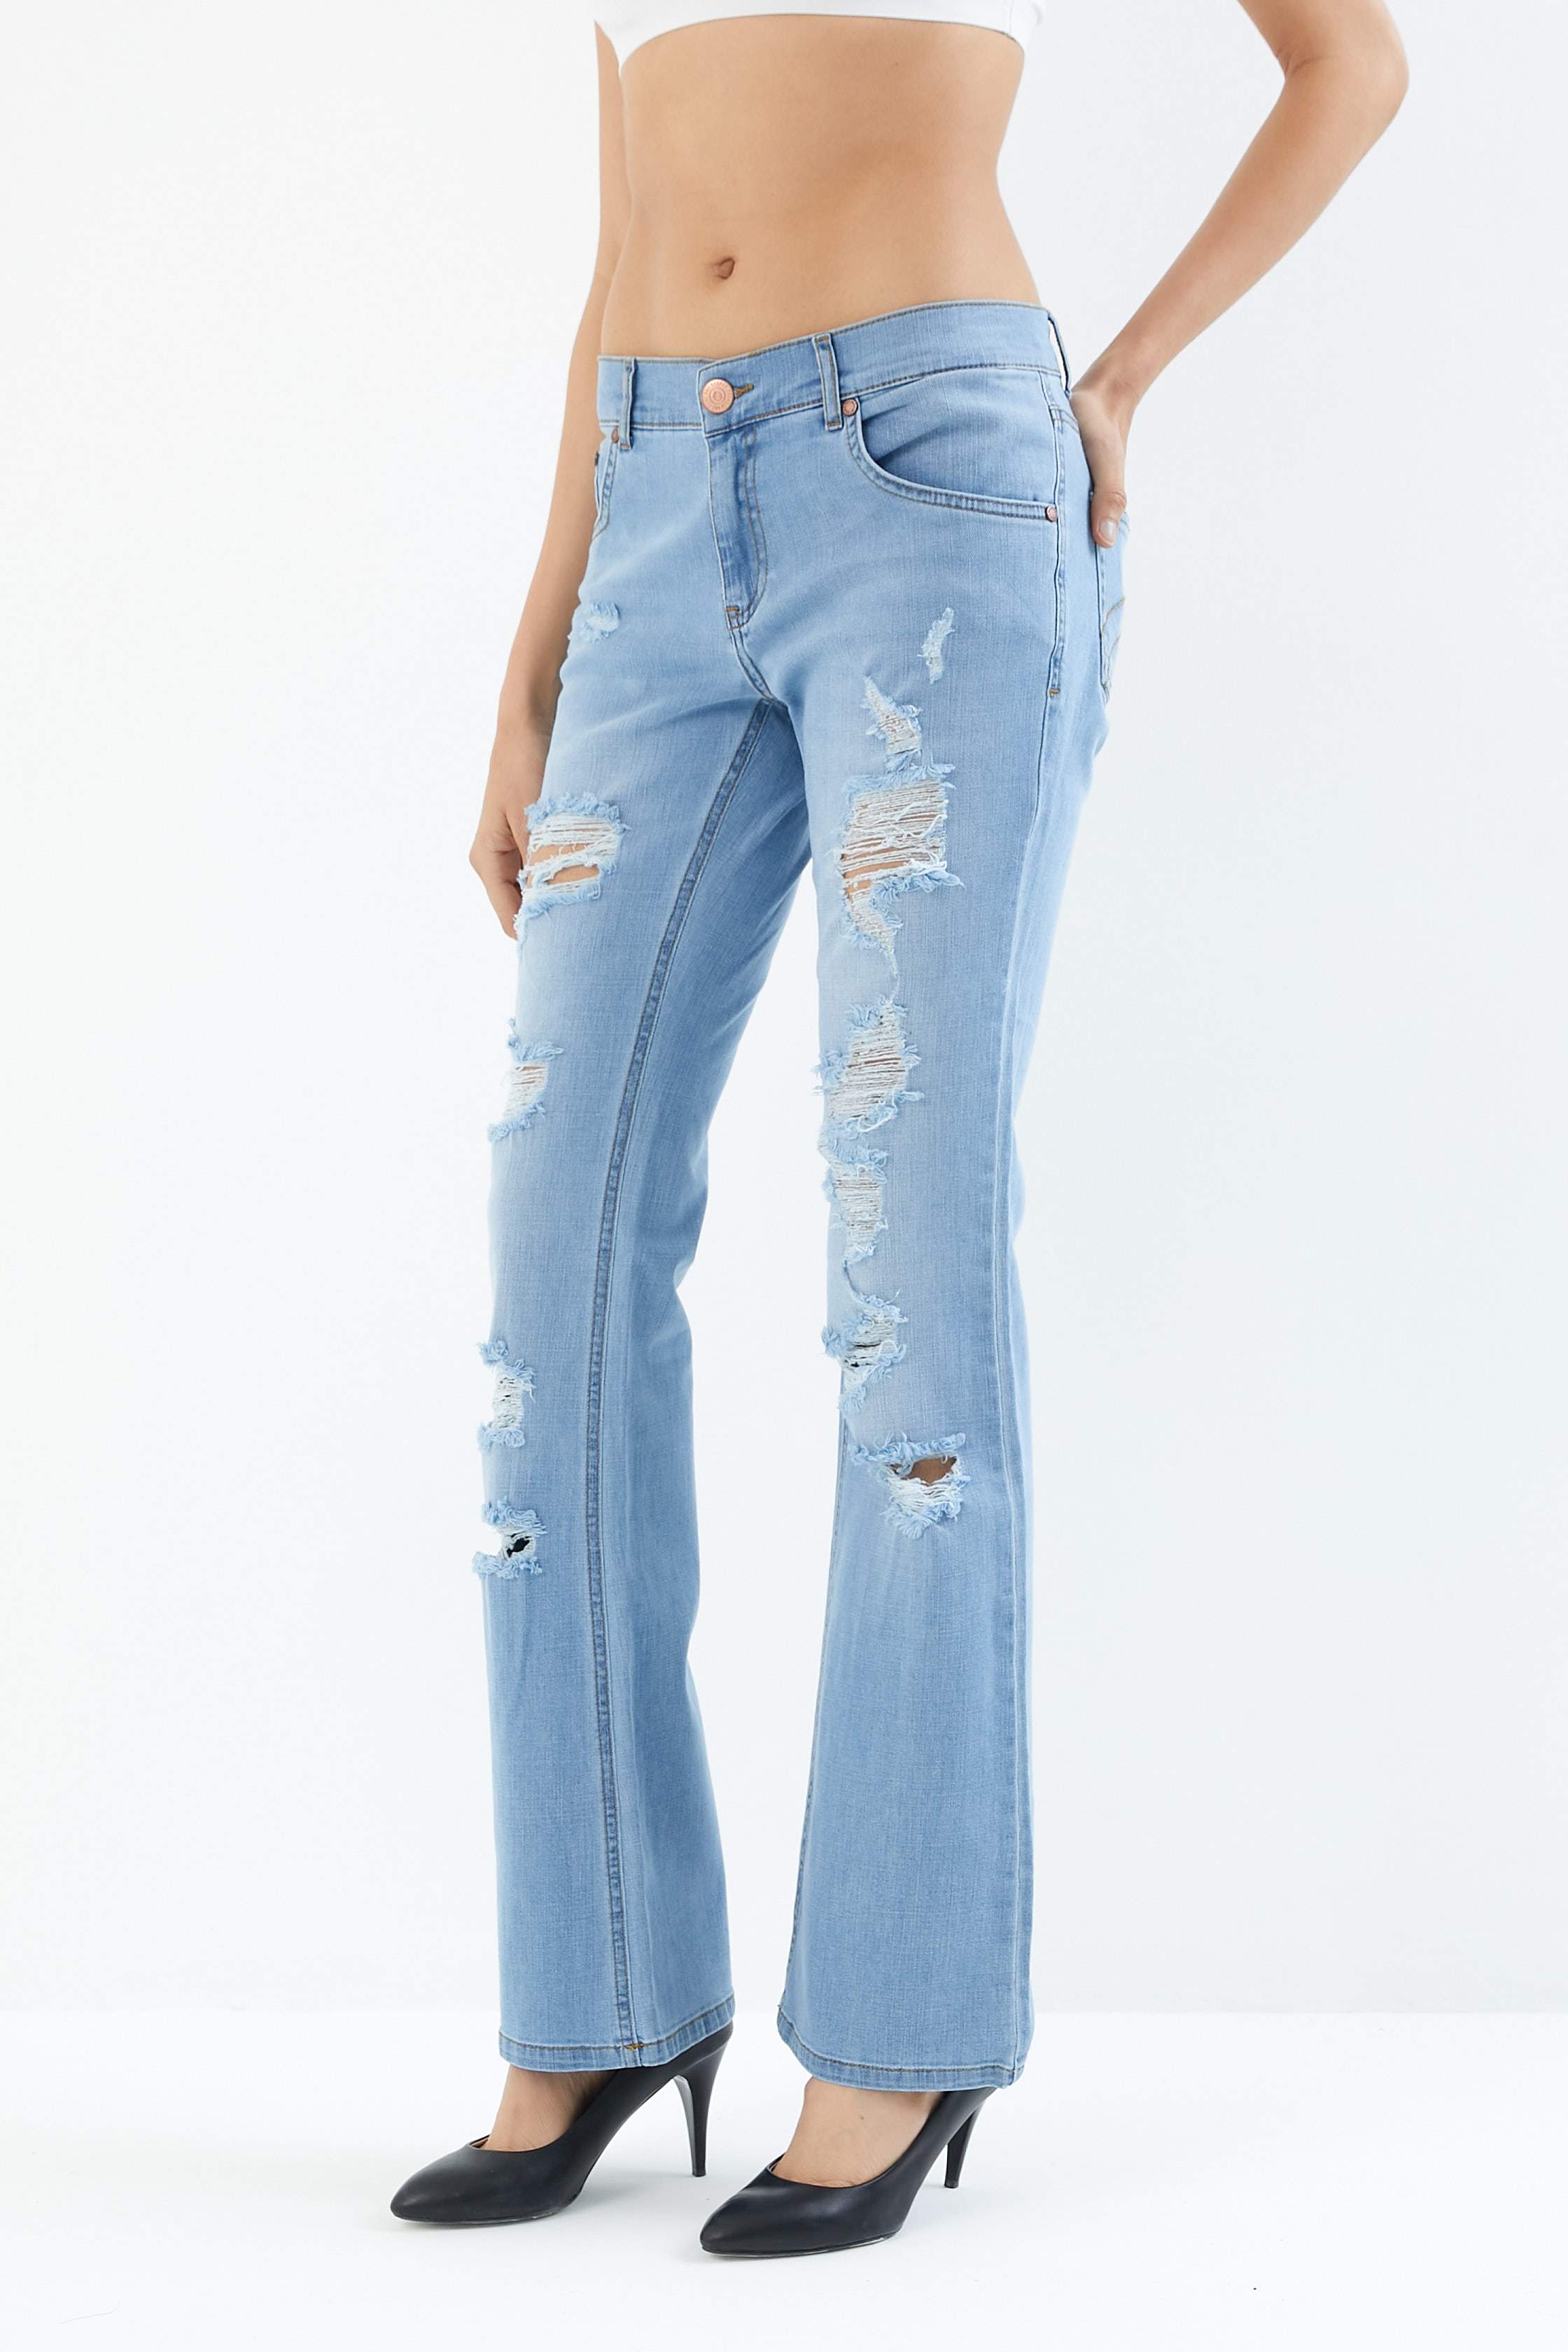 Wide-leg Ripped Light Blue Jeans 4031